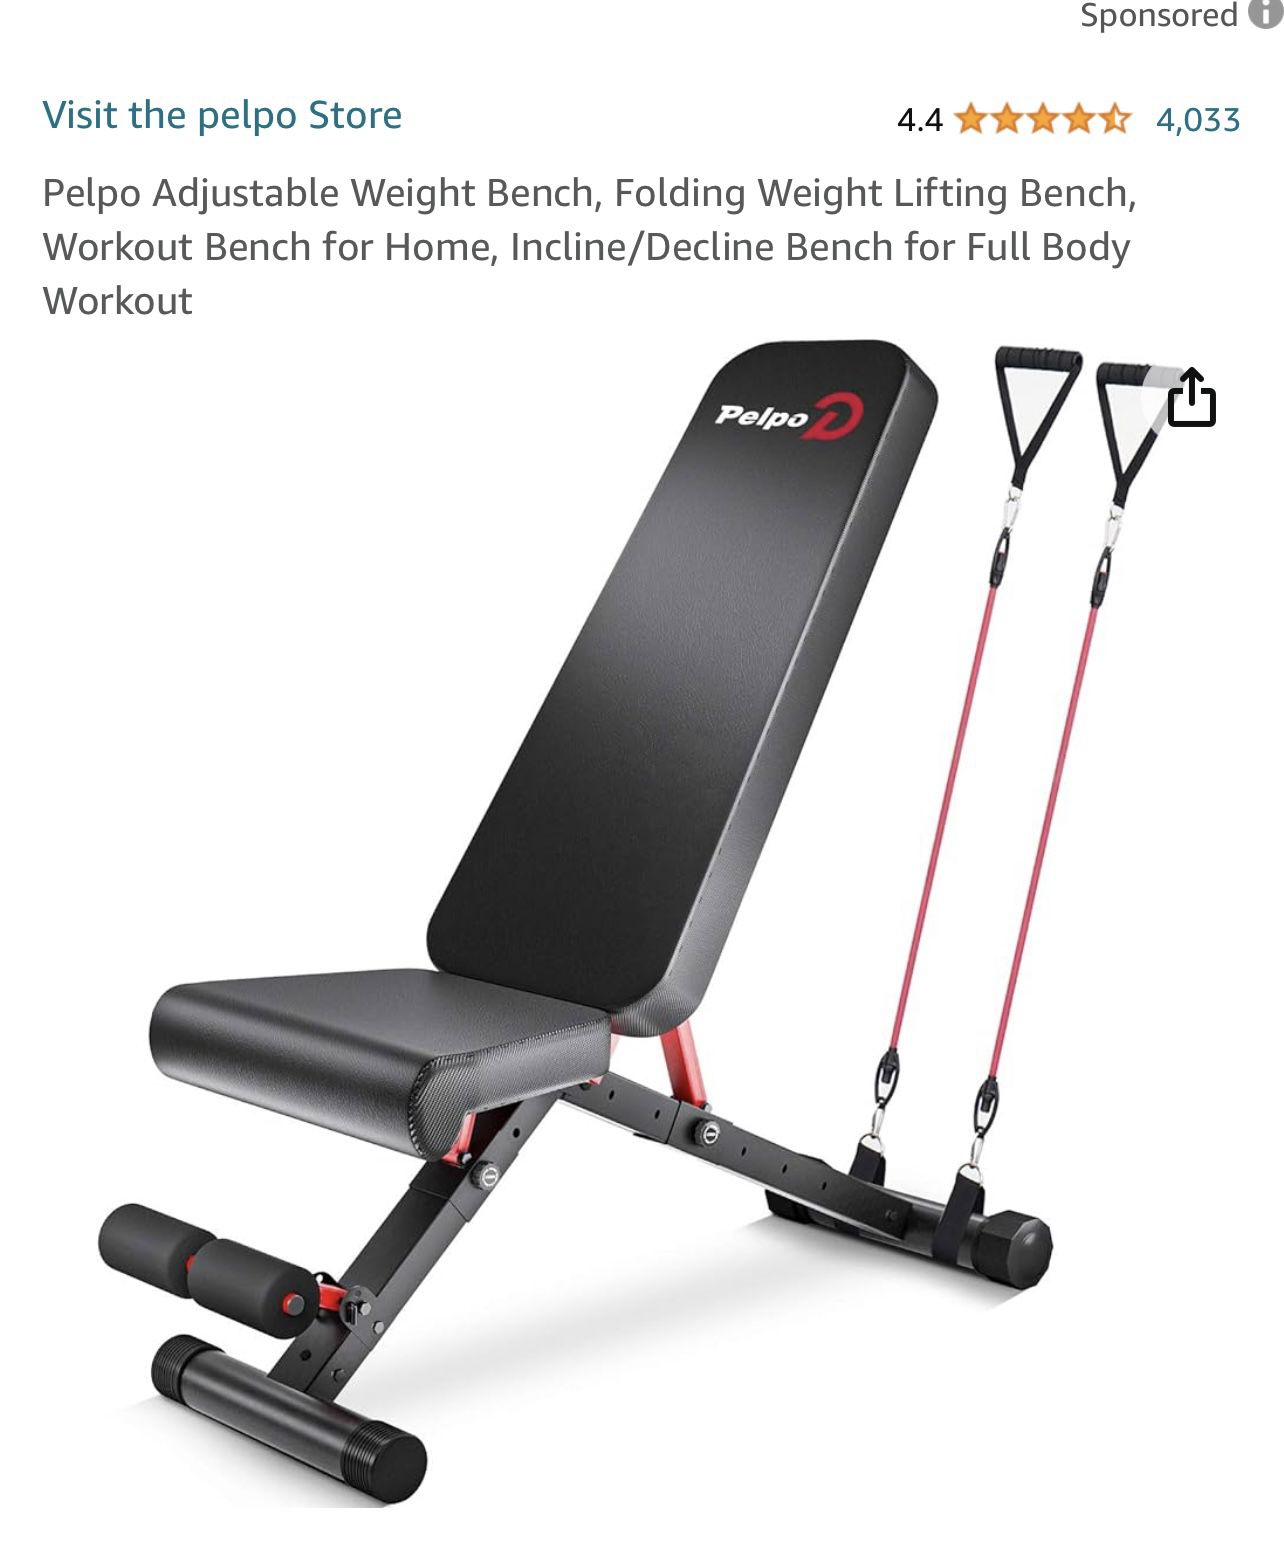 Pelpo Adjustable Weight Bench Brand New